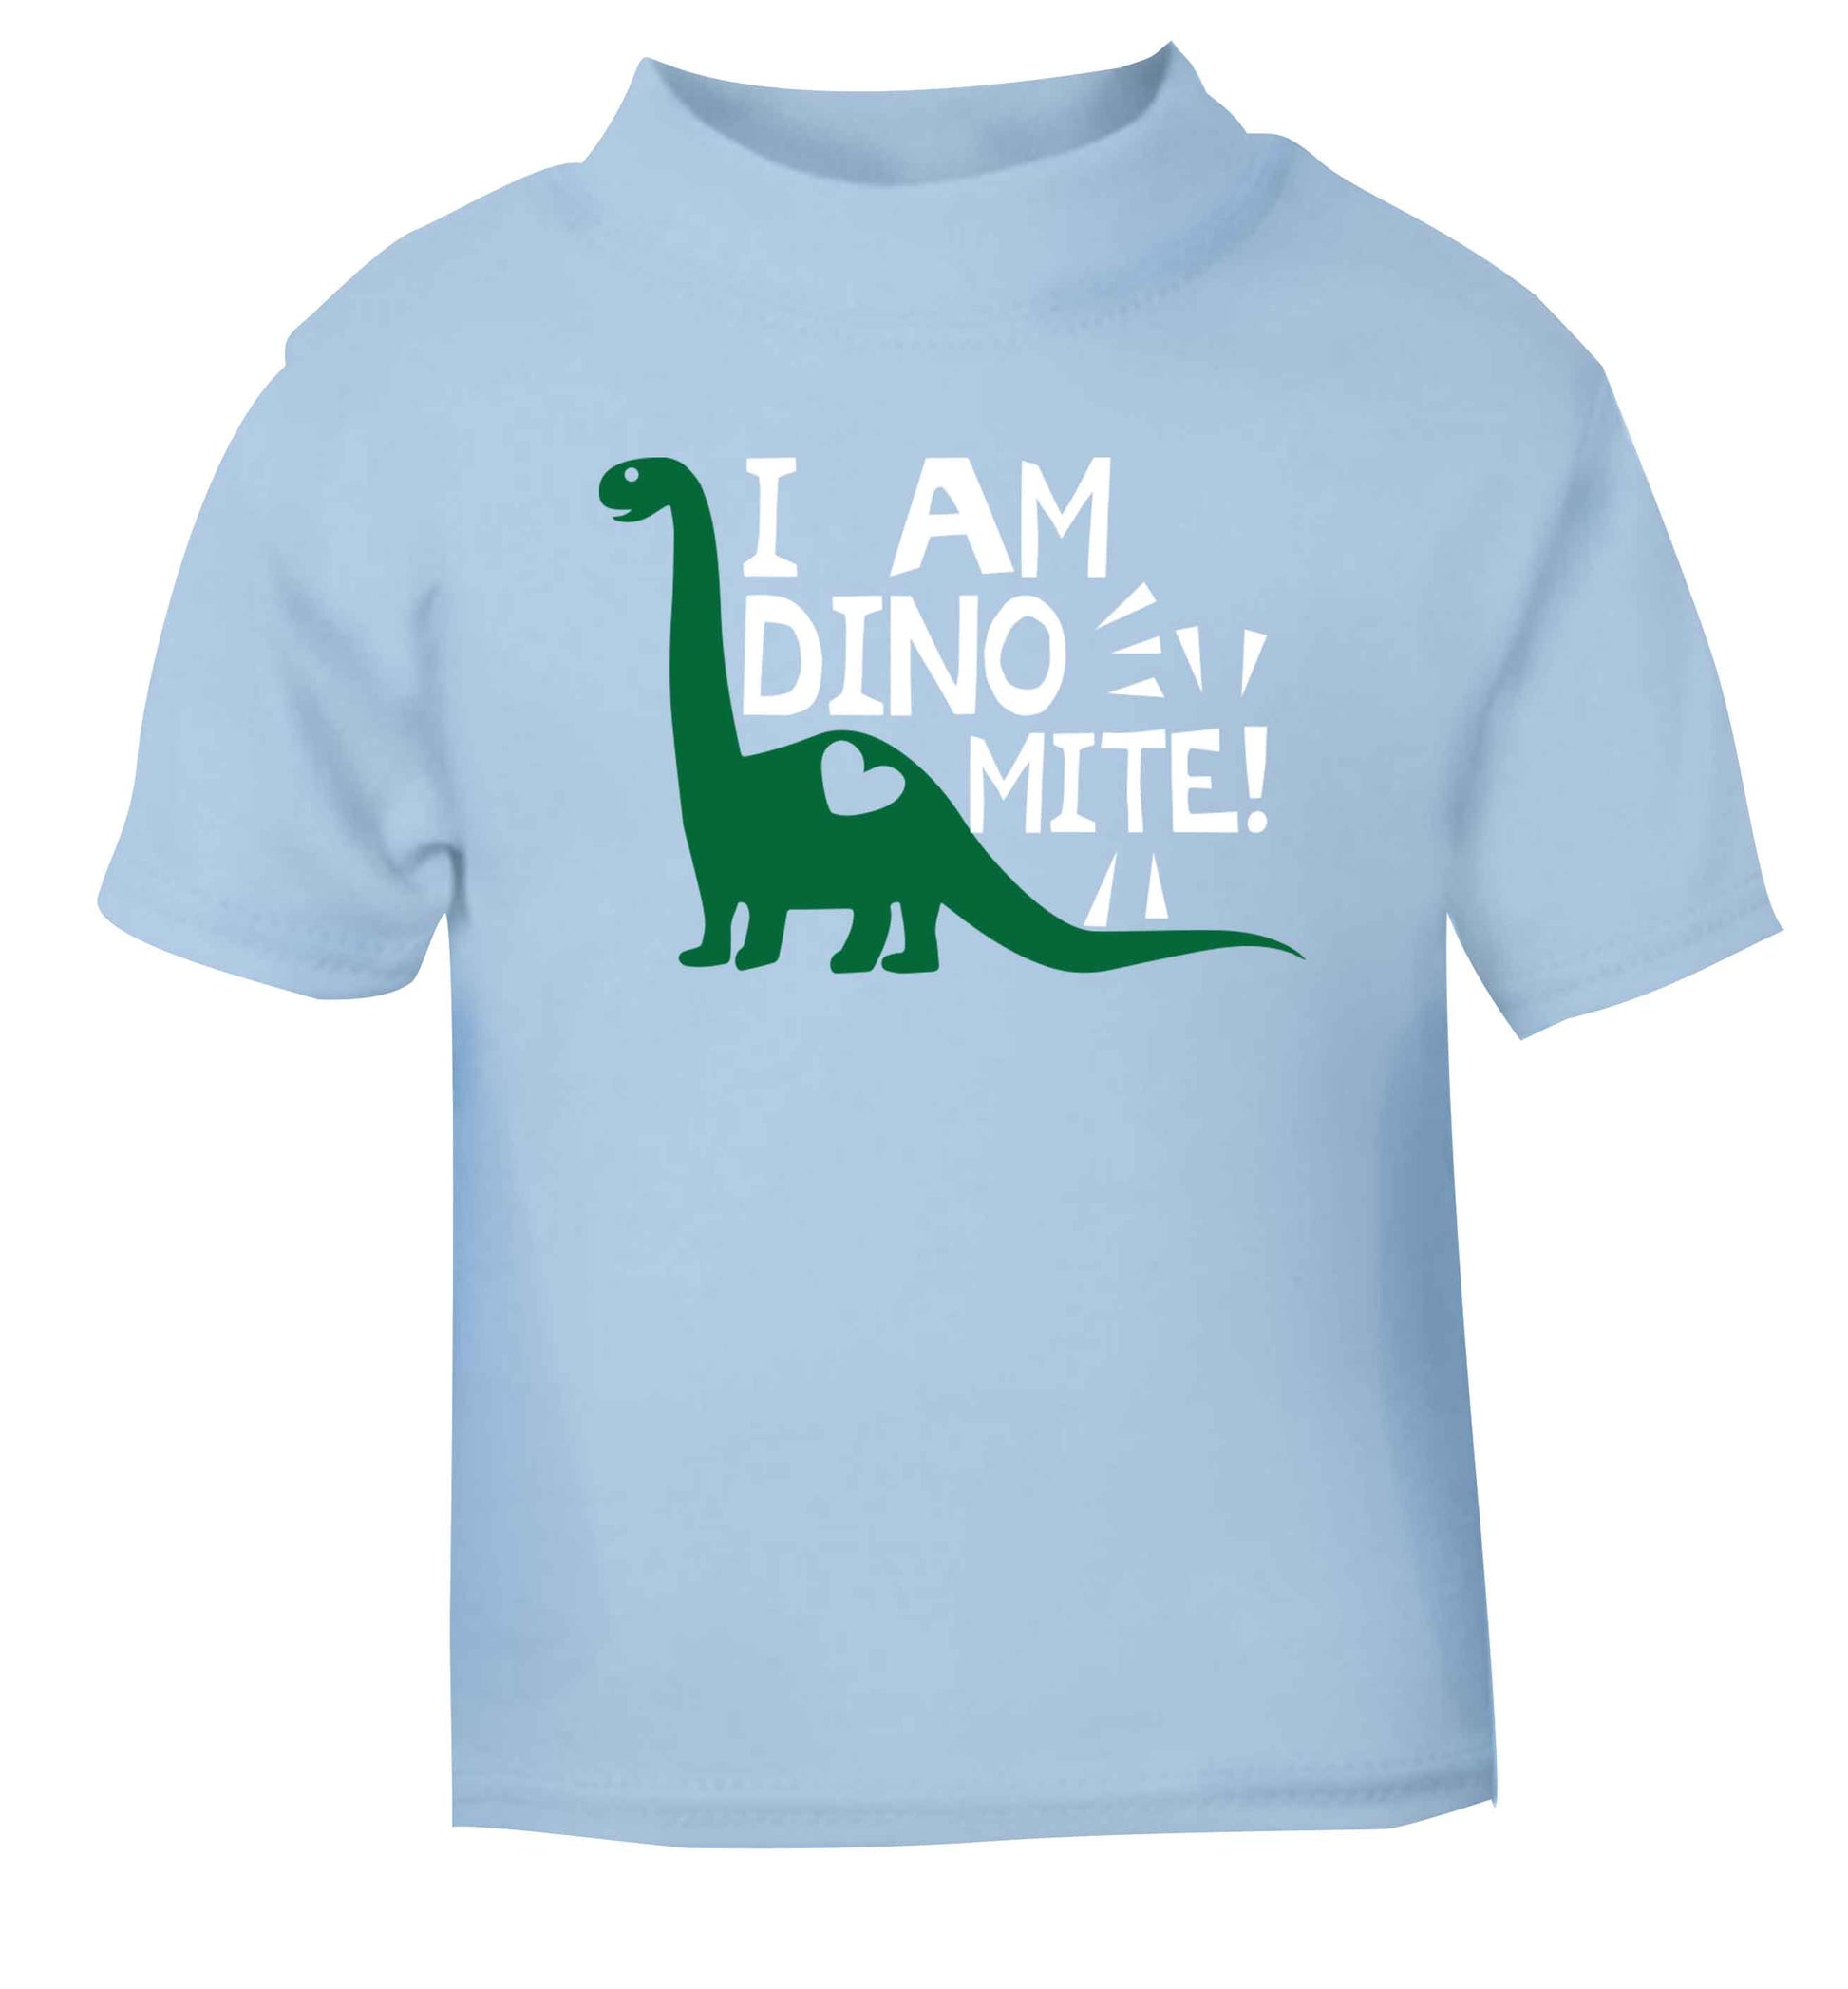 I am dinomite! light blue Baby Toddler Tshirt 2 Years